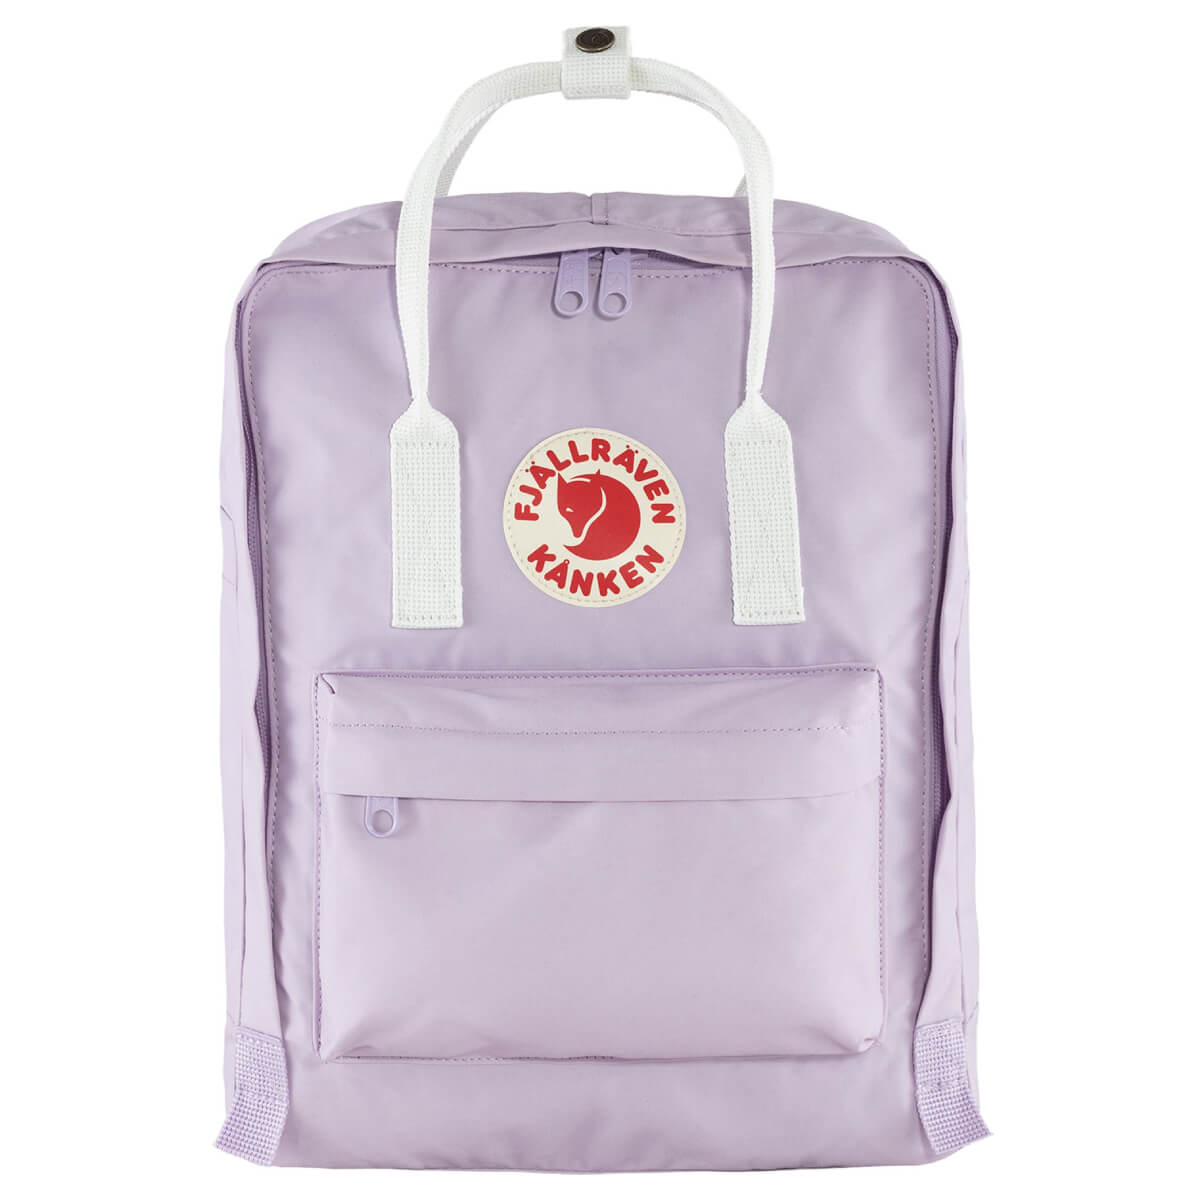 Городской рюкзак Fjallraven Kanken Pastel Lavender/Cool White 16 л 23510.457-106